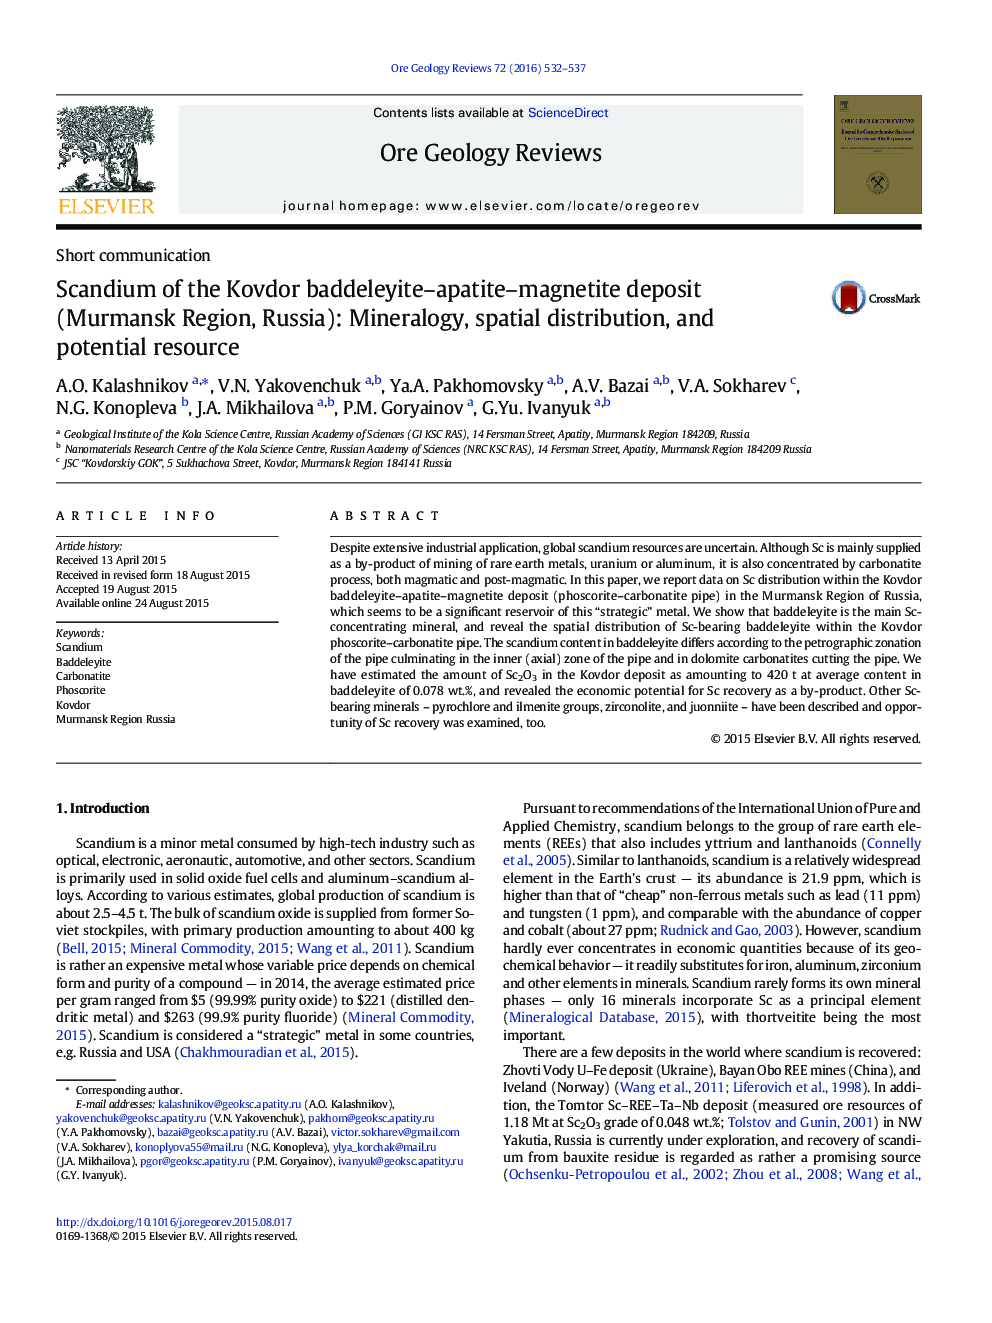 Short communicationScandium of the Kovdor baddeleyite-apatite-magnetite deposit (Murmansk Region, Russia): Mineralogy, spatial distribution, and potential resource